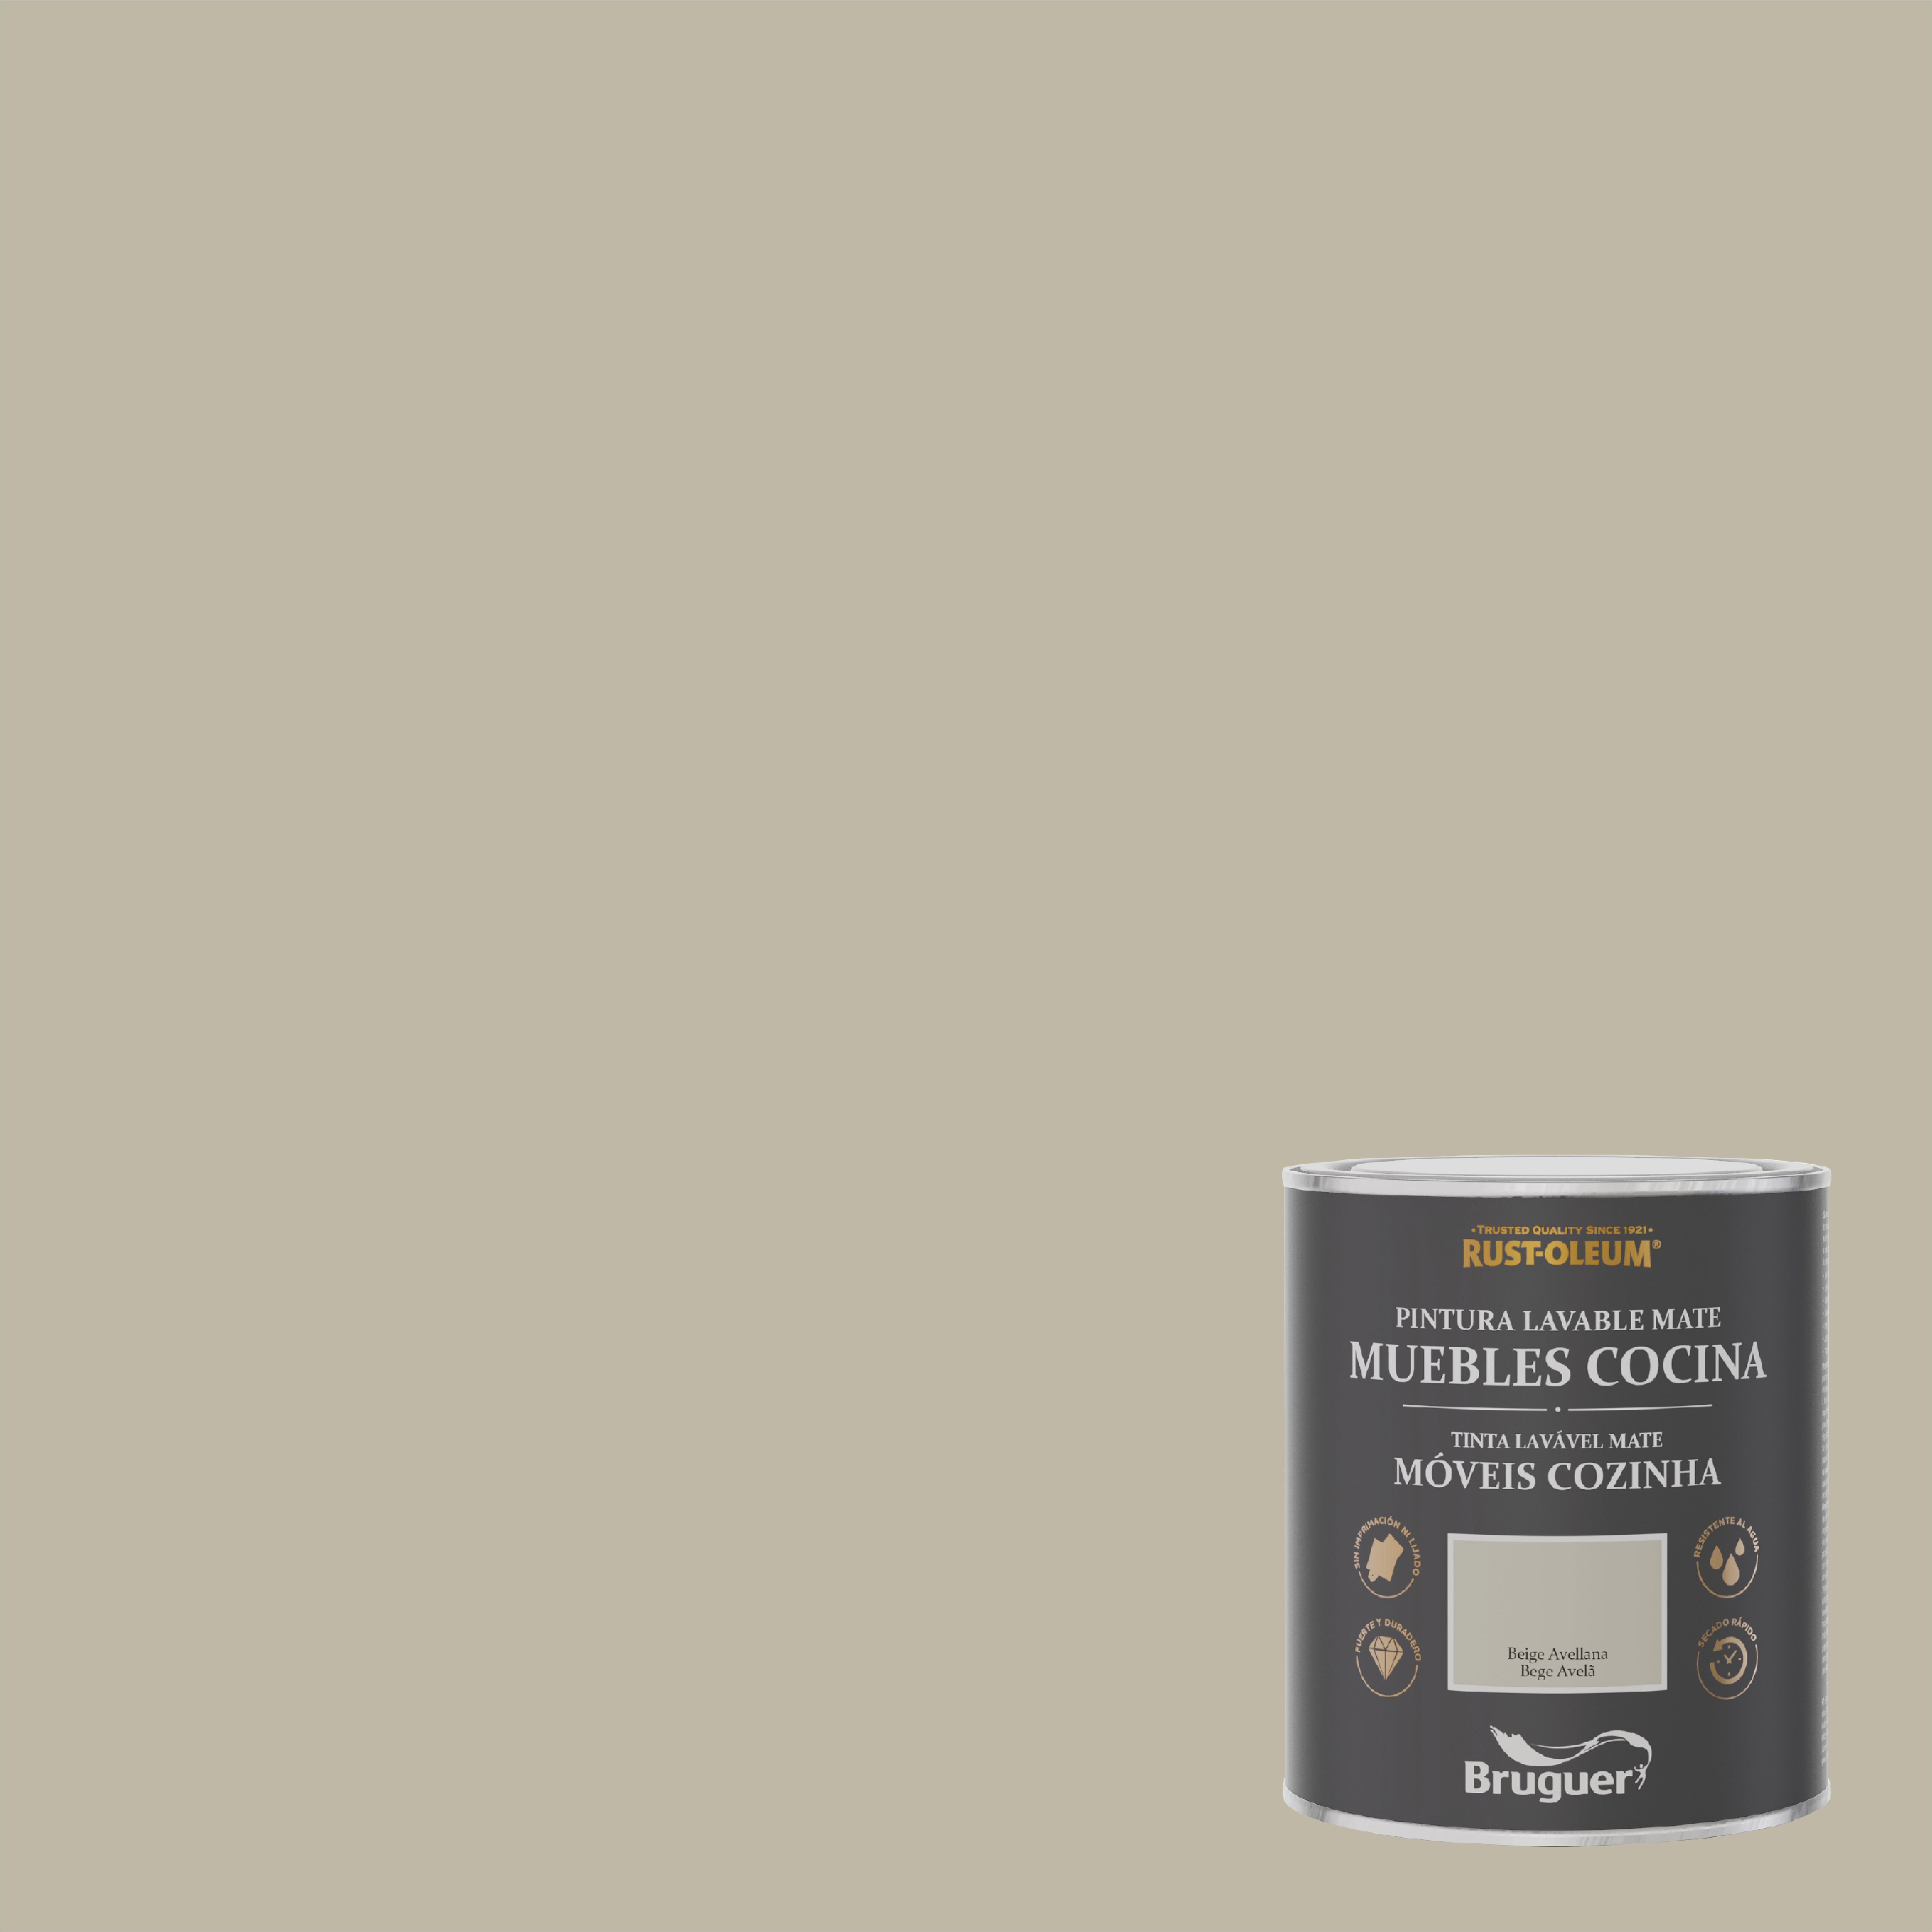 Apellido vapor minusválido Pintura para muebles RUSTOLEUM 750ml beige avellana | Leroy Merlin